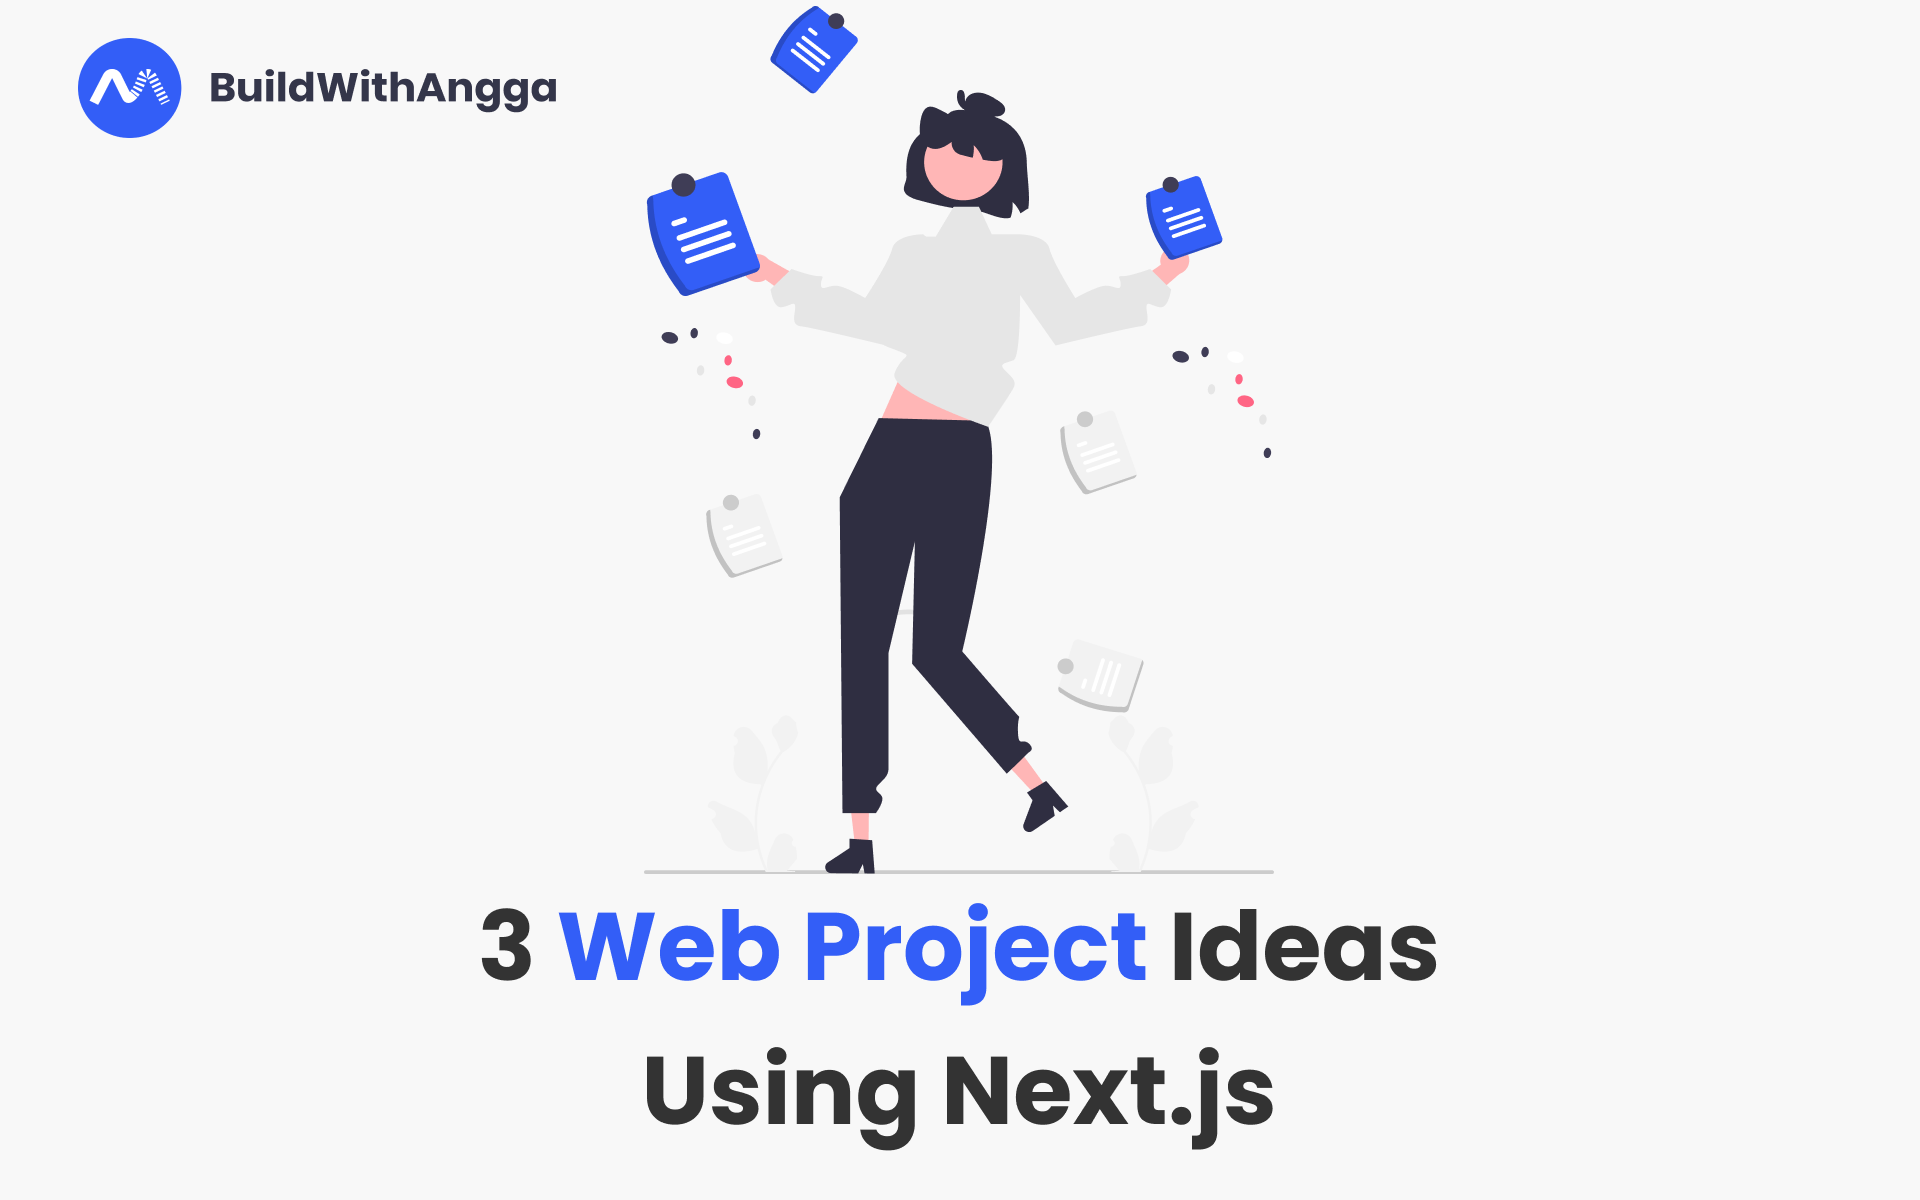 Kelas 3 Ide Project Web Menggunakan Next.js di BuildWithAngga